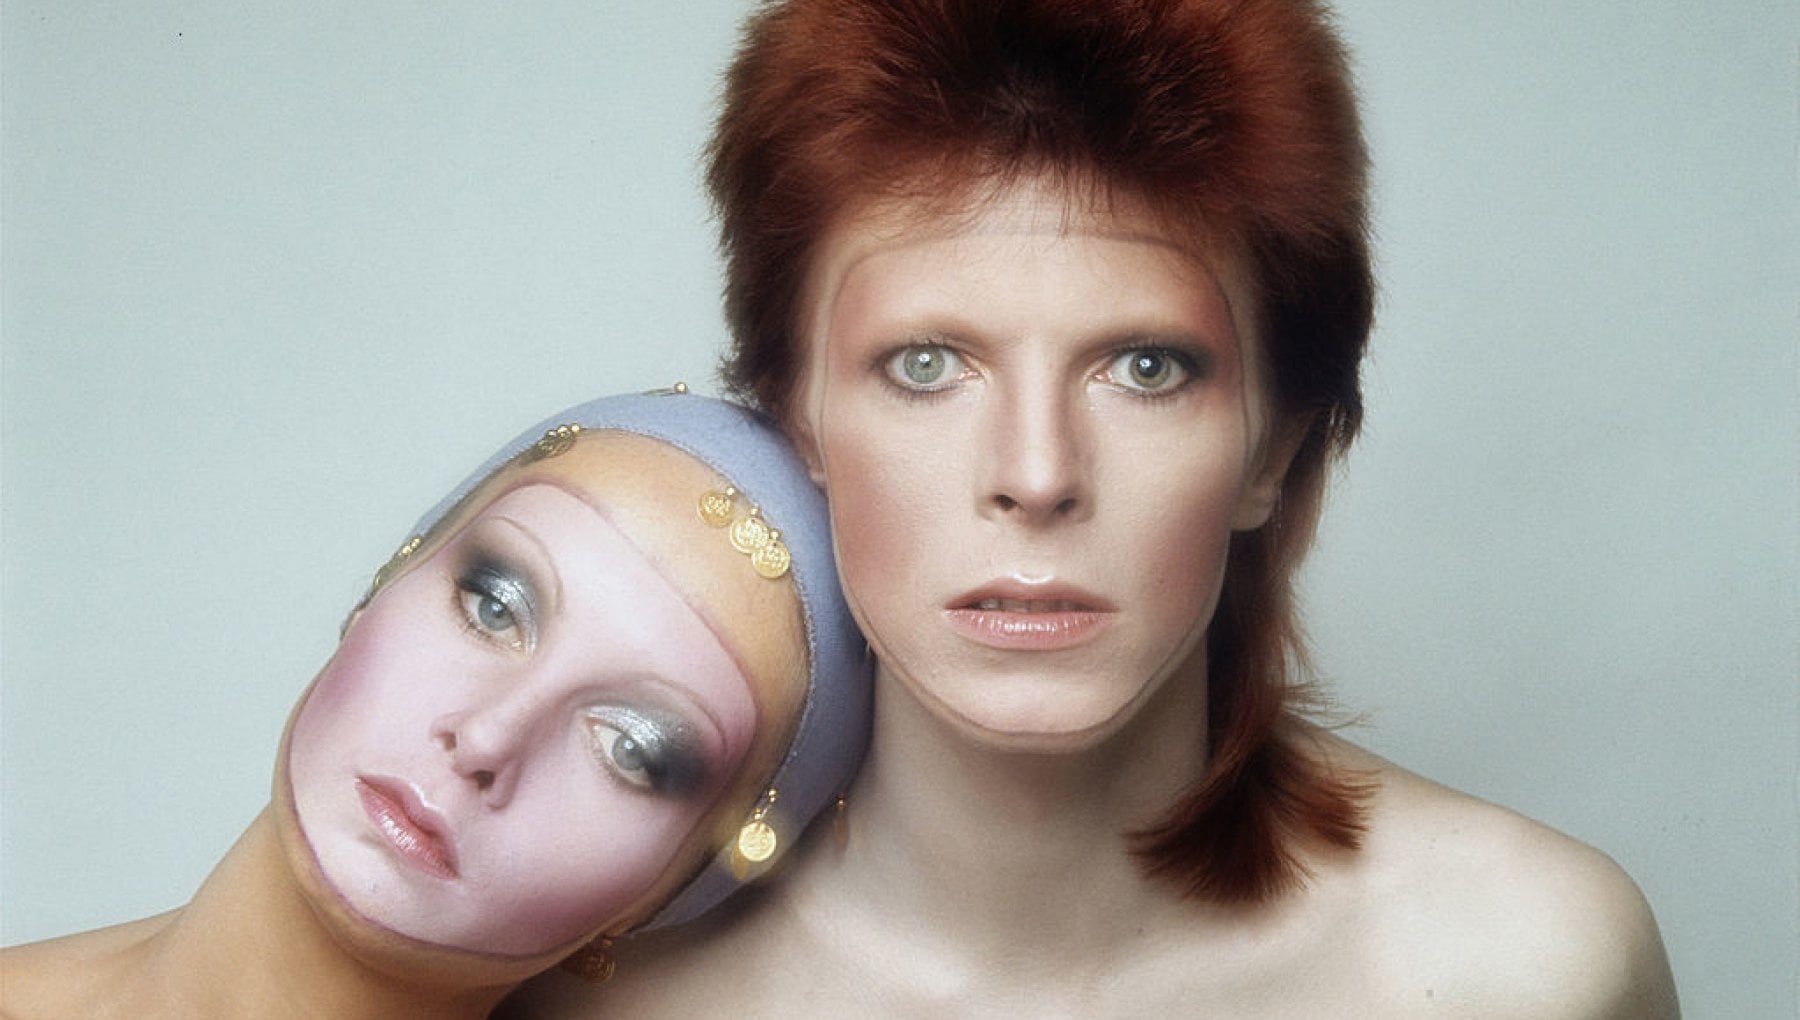 New Adobe digital tools dedicated to David Bowie-Ziggy Stardust